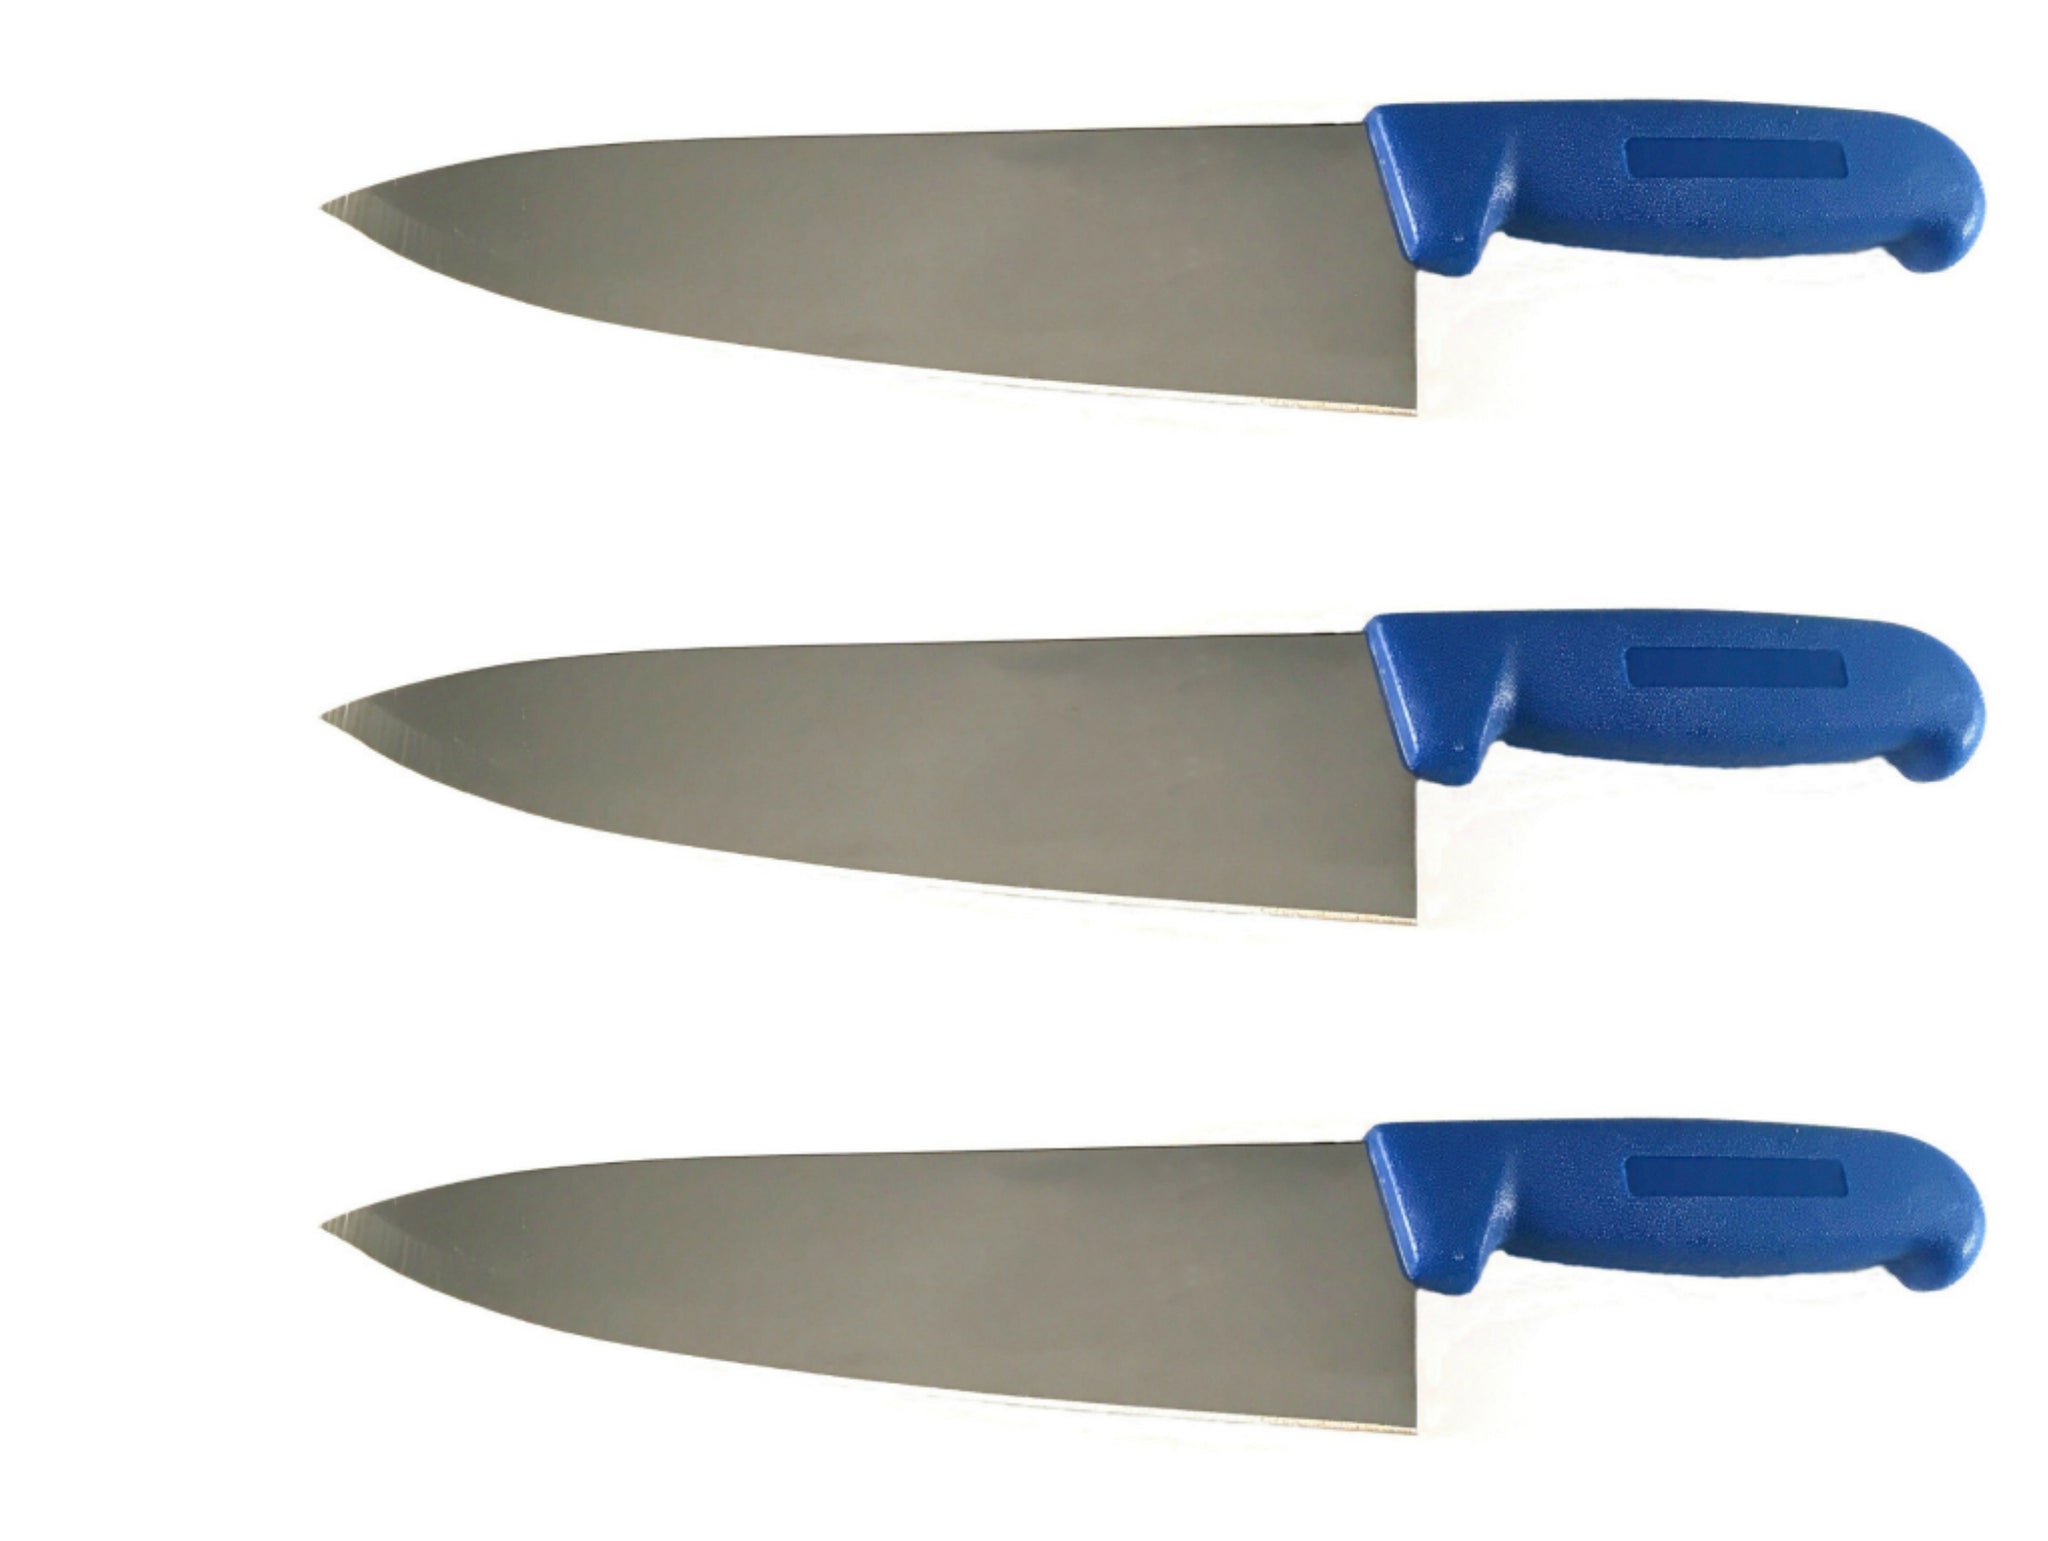 8 Pcs Professional Chef knife Set – Scope Kitchen